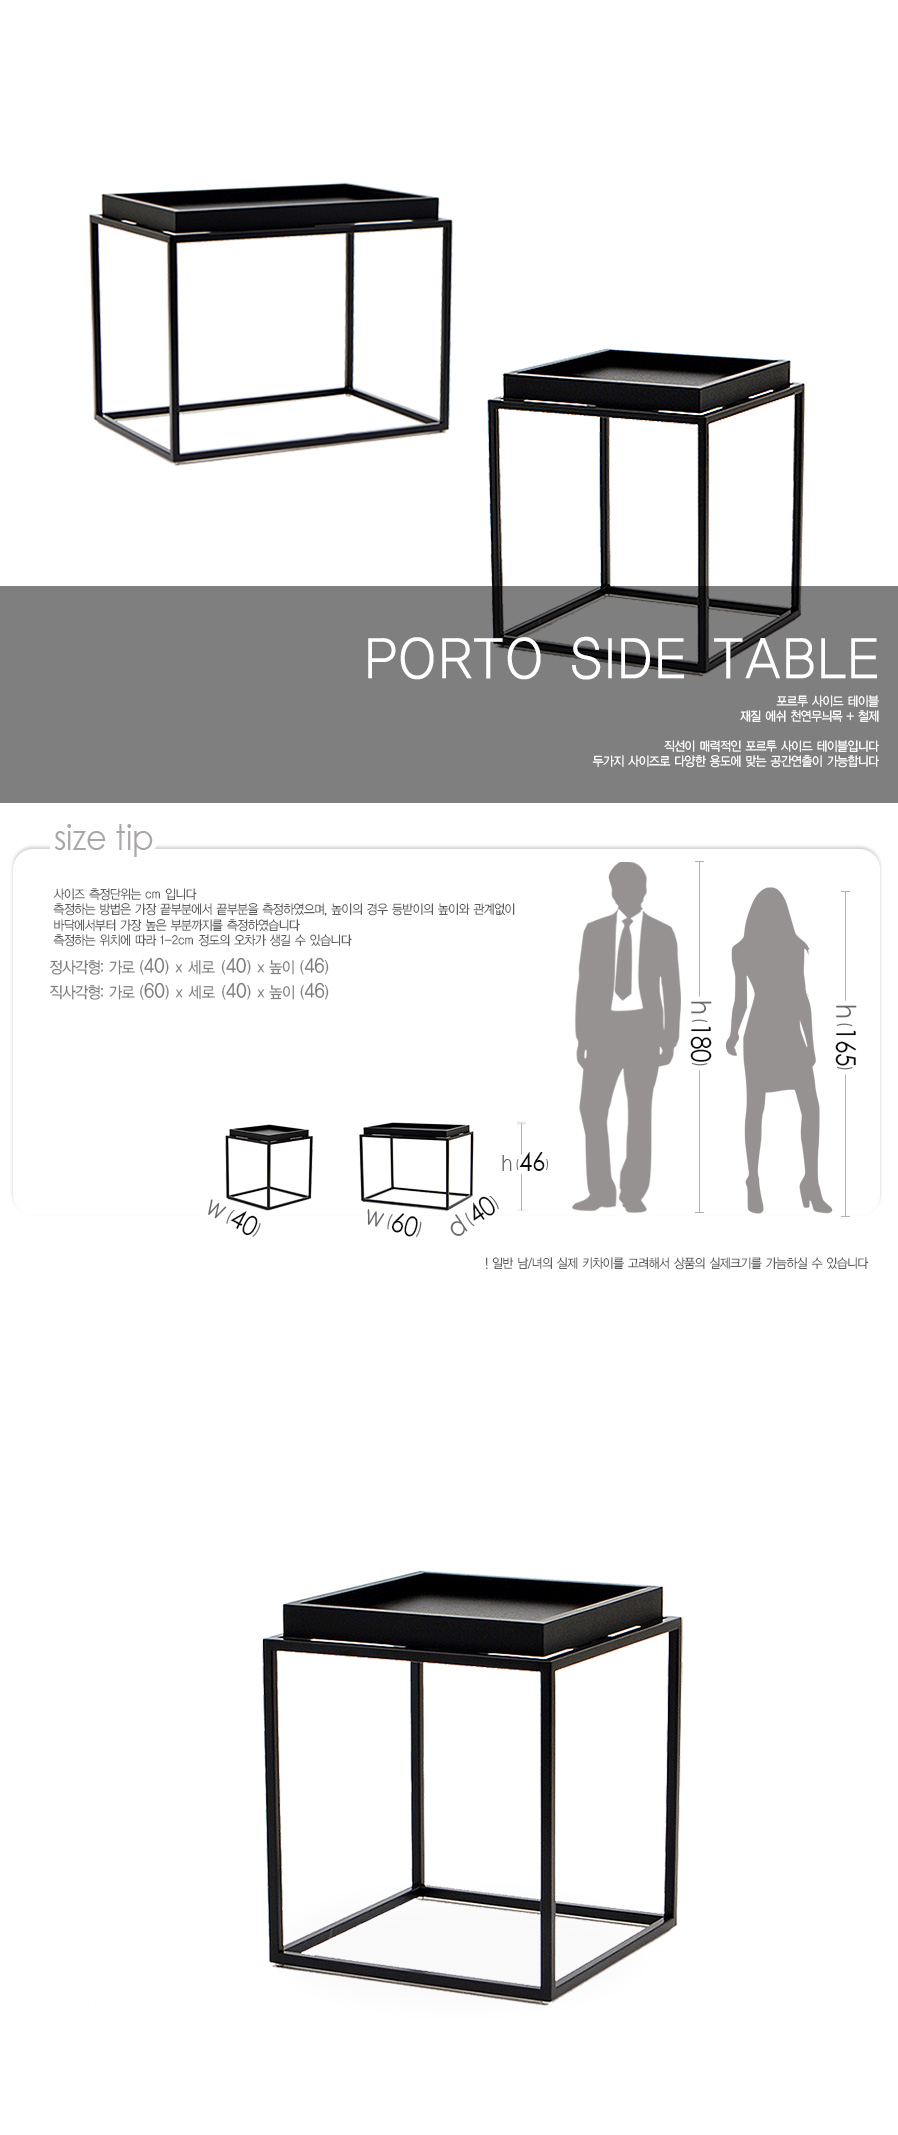 porto-side-table(포르투-사이드-테이블)_01.jpg